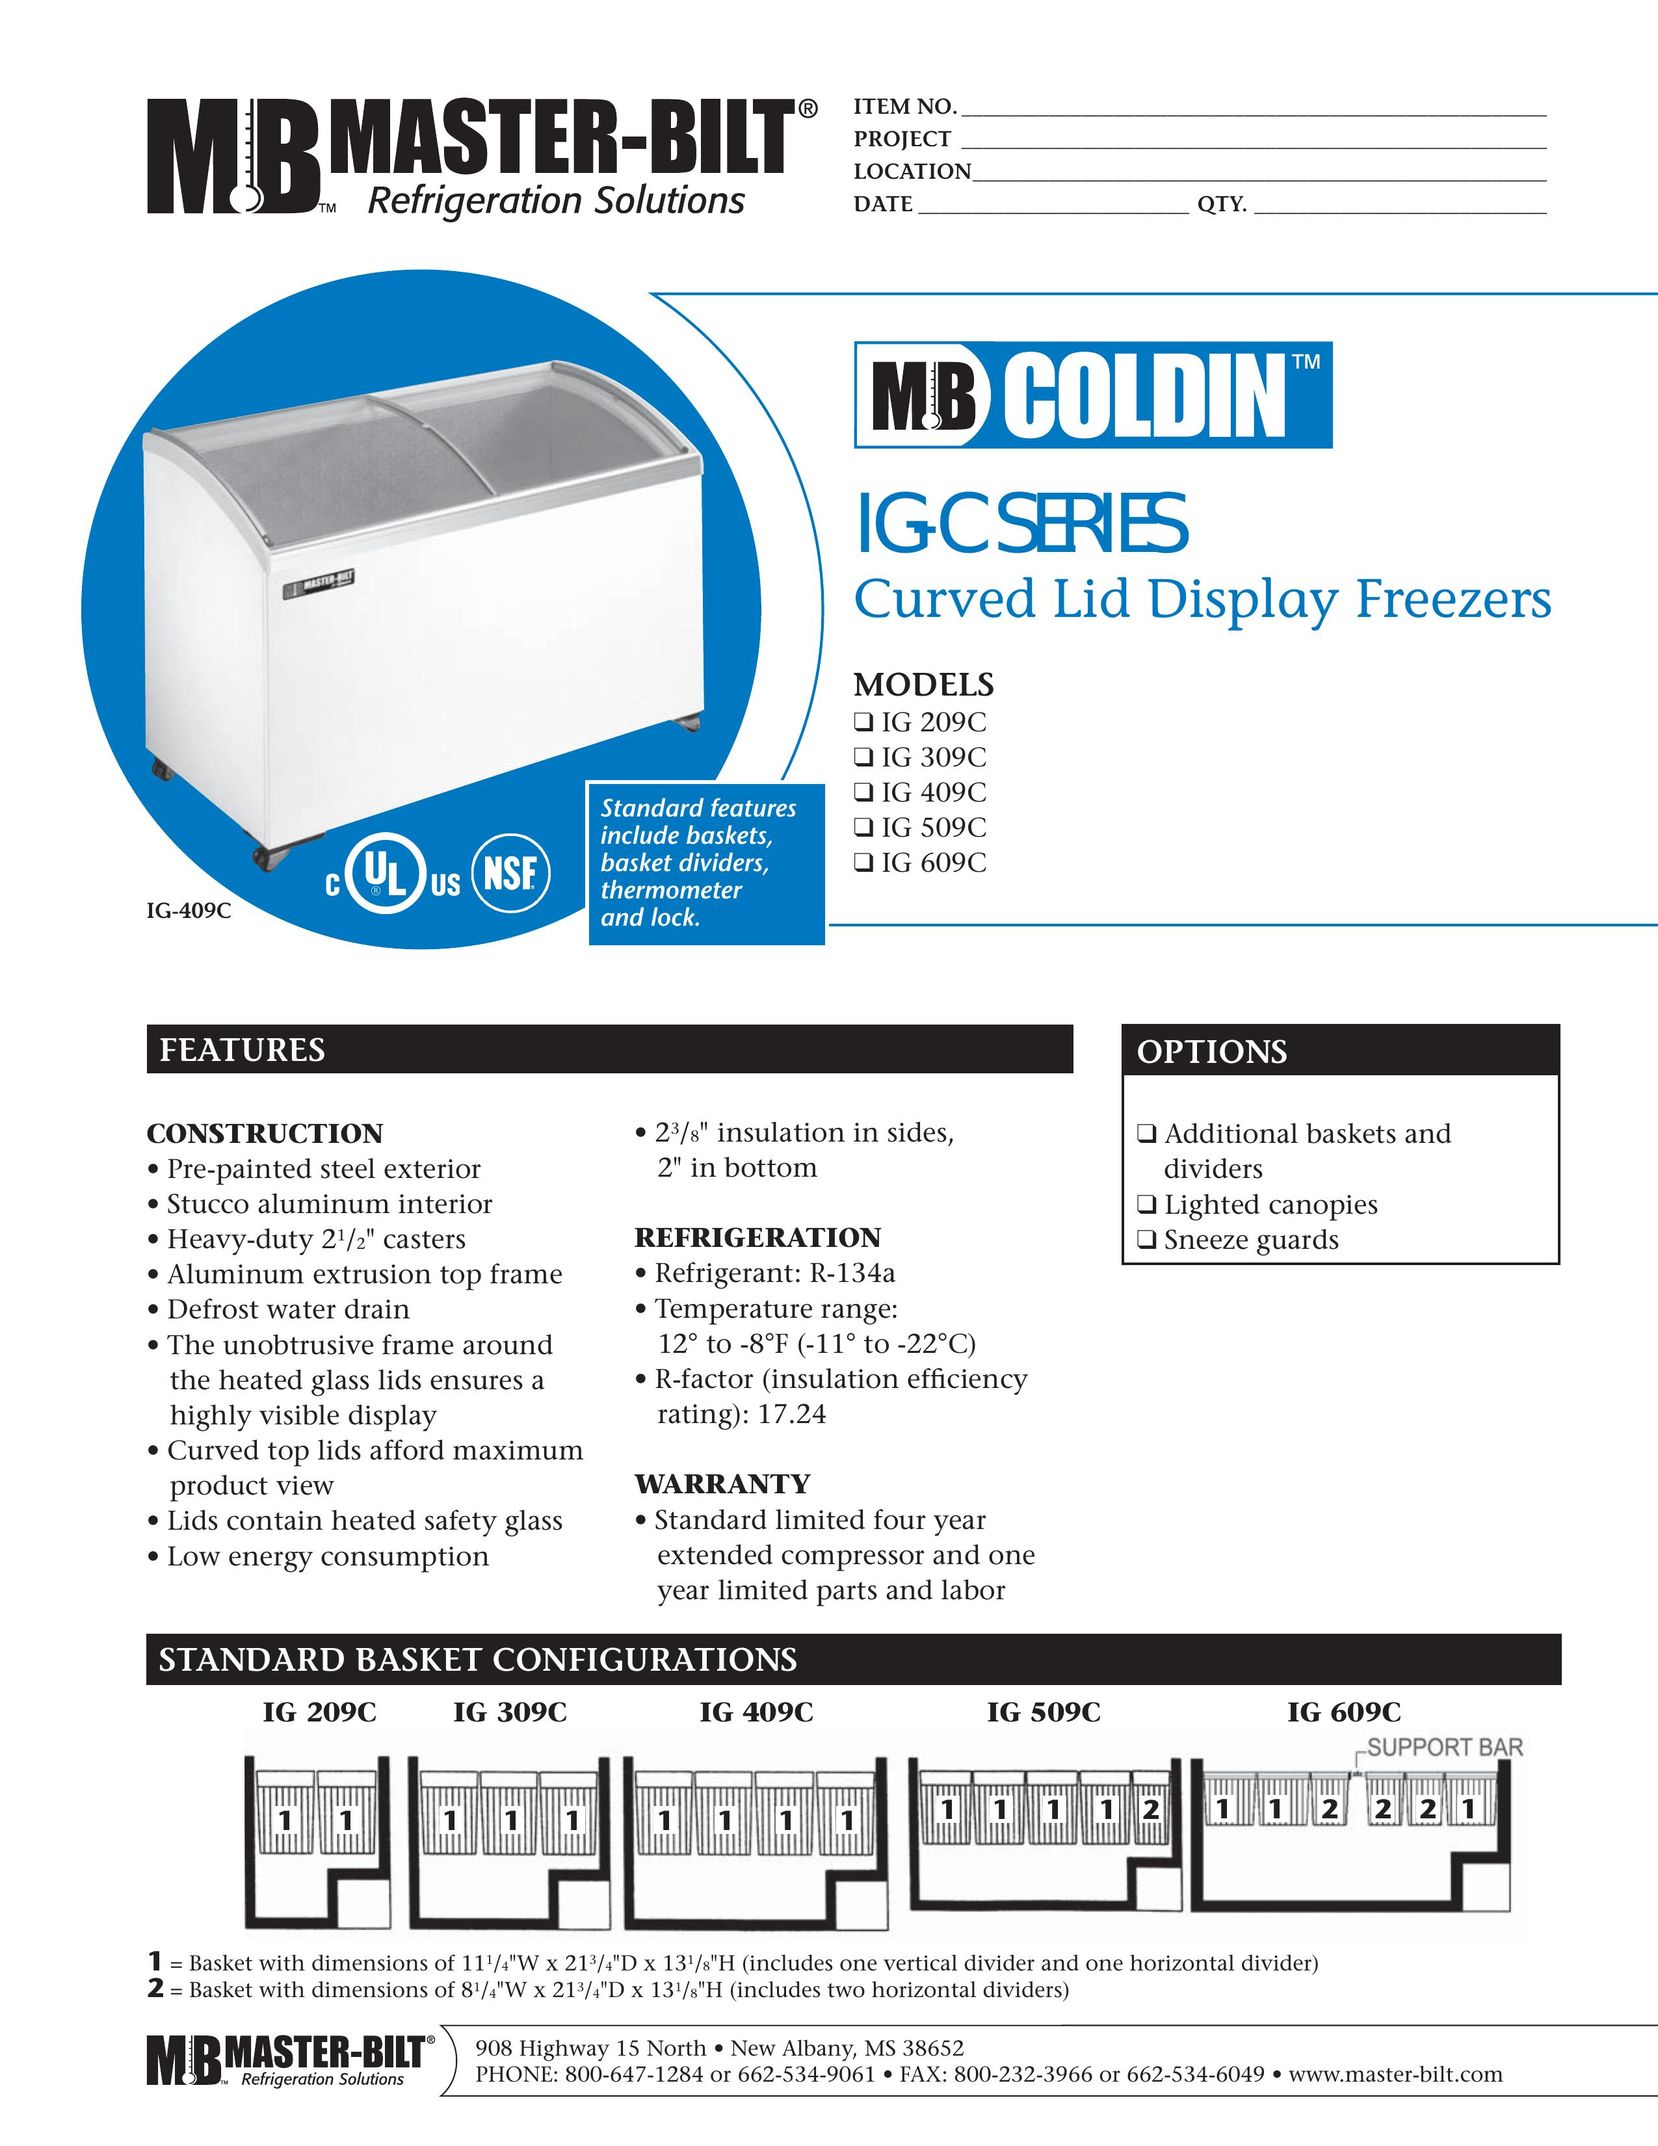 Master Bilt IG 609C Freezer User Manual